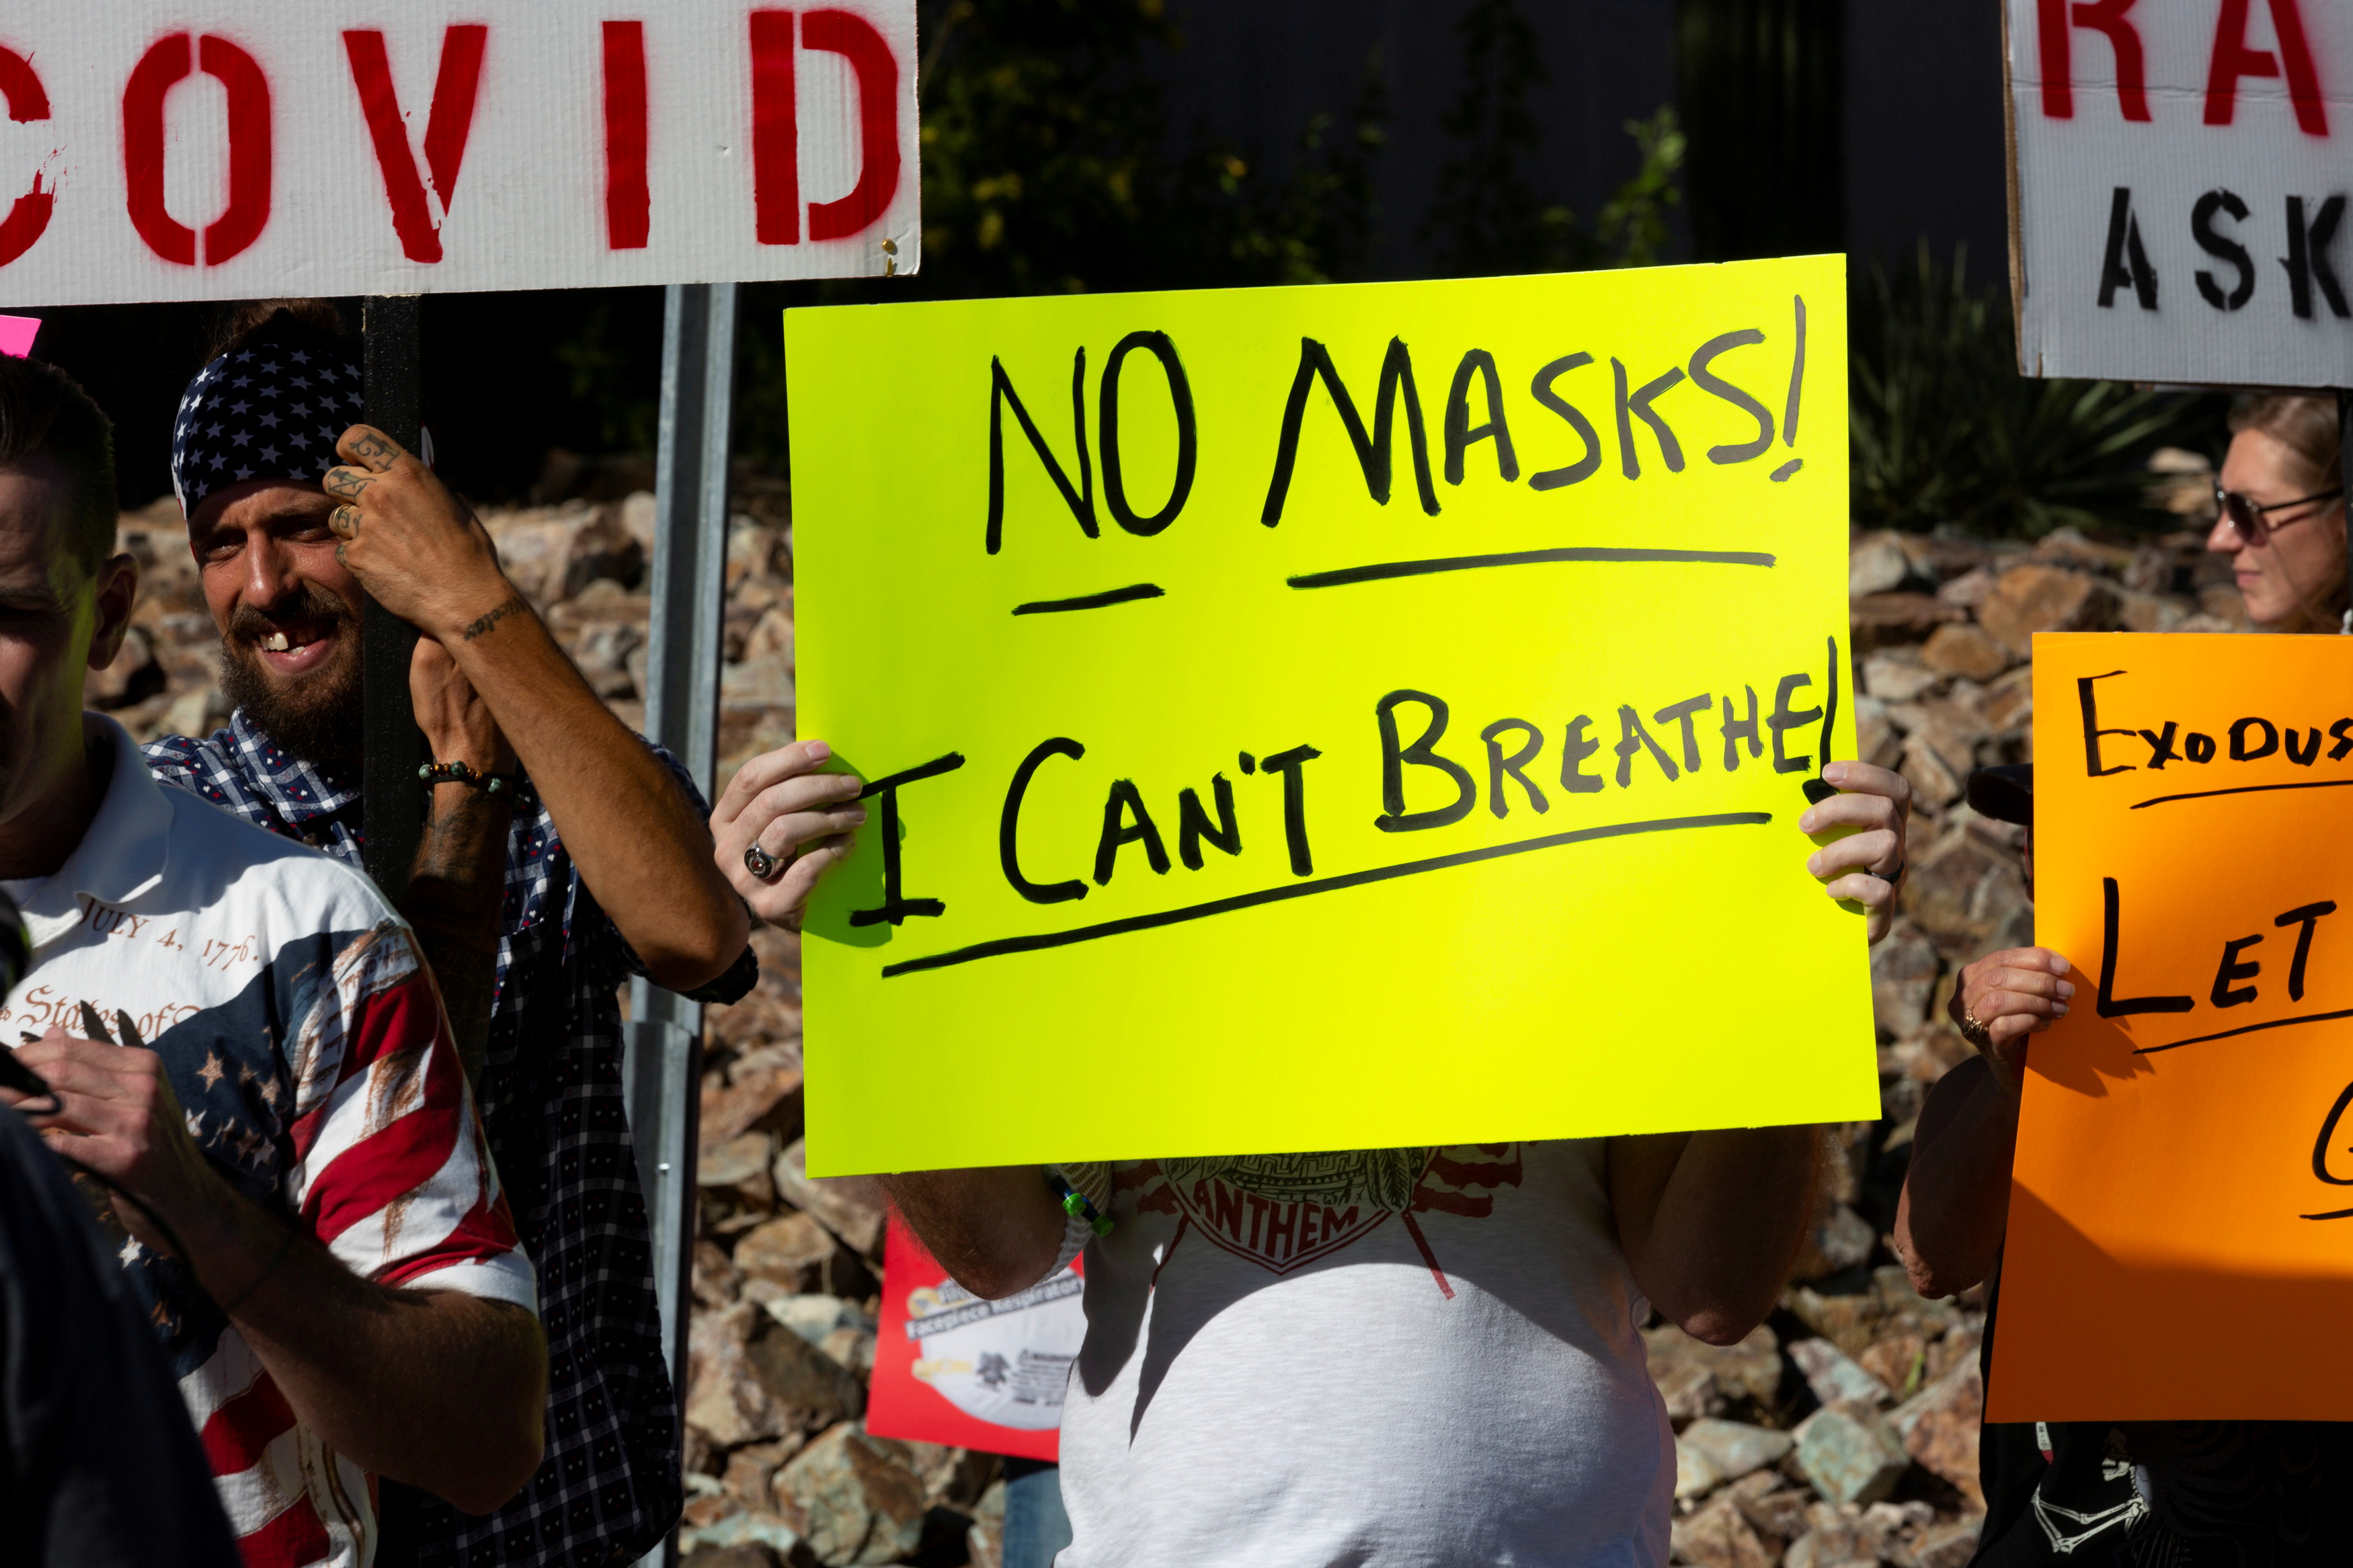 Amid the coronavirus disease (COVID-19) outbreak, Arizona mandates masks